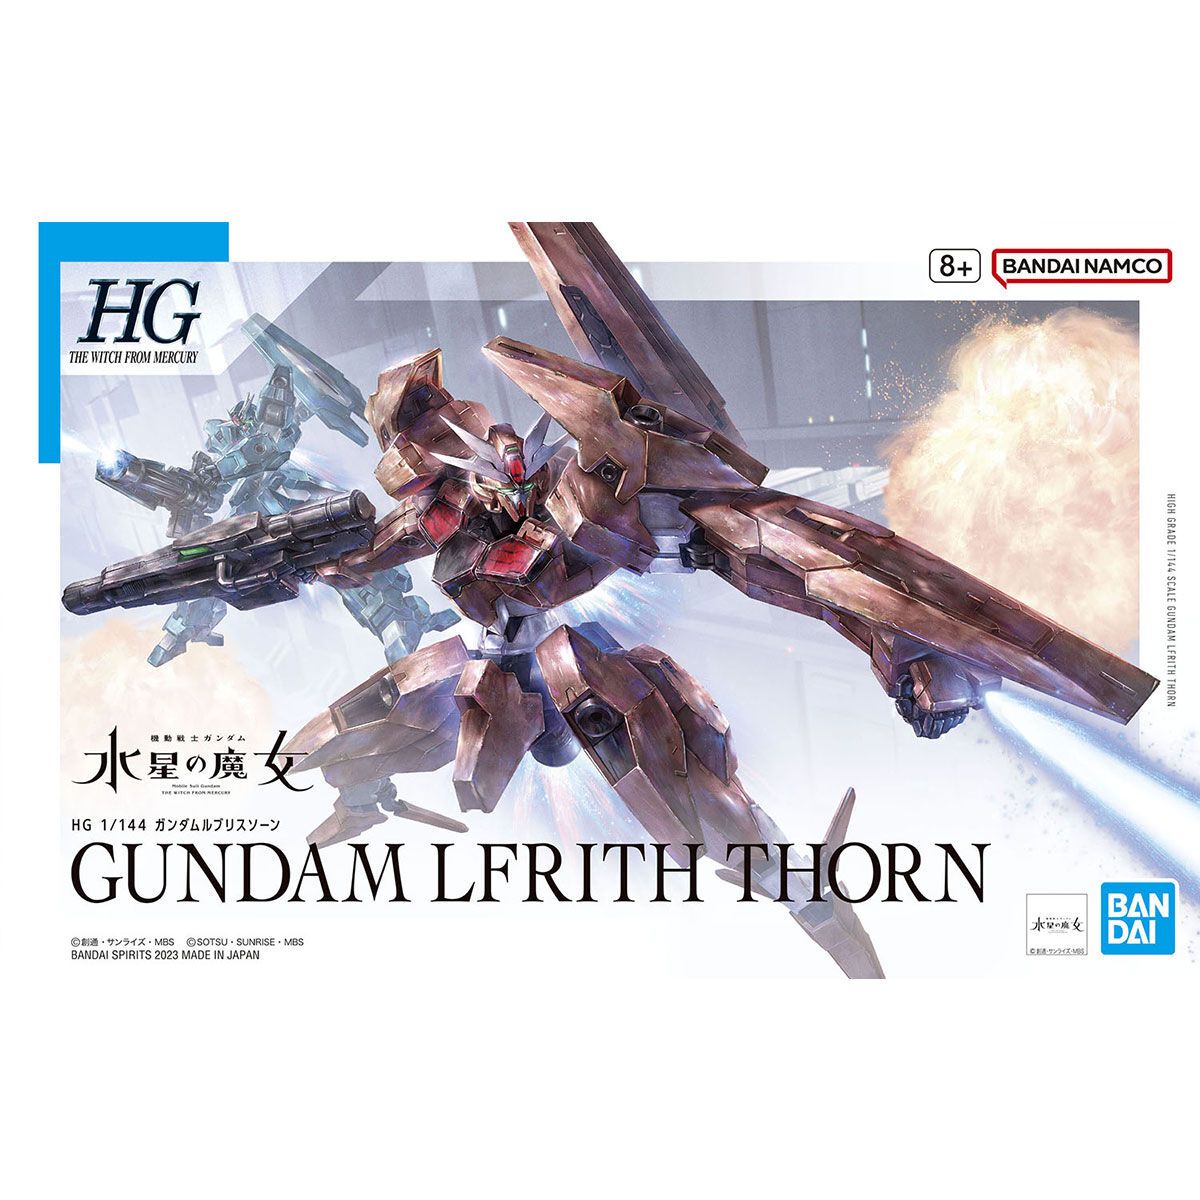 Bandai 1/144 Scale HG Gundam Lfrith Thorn Model Kit